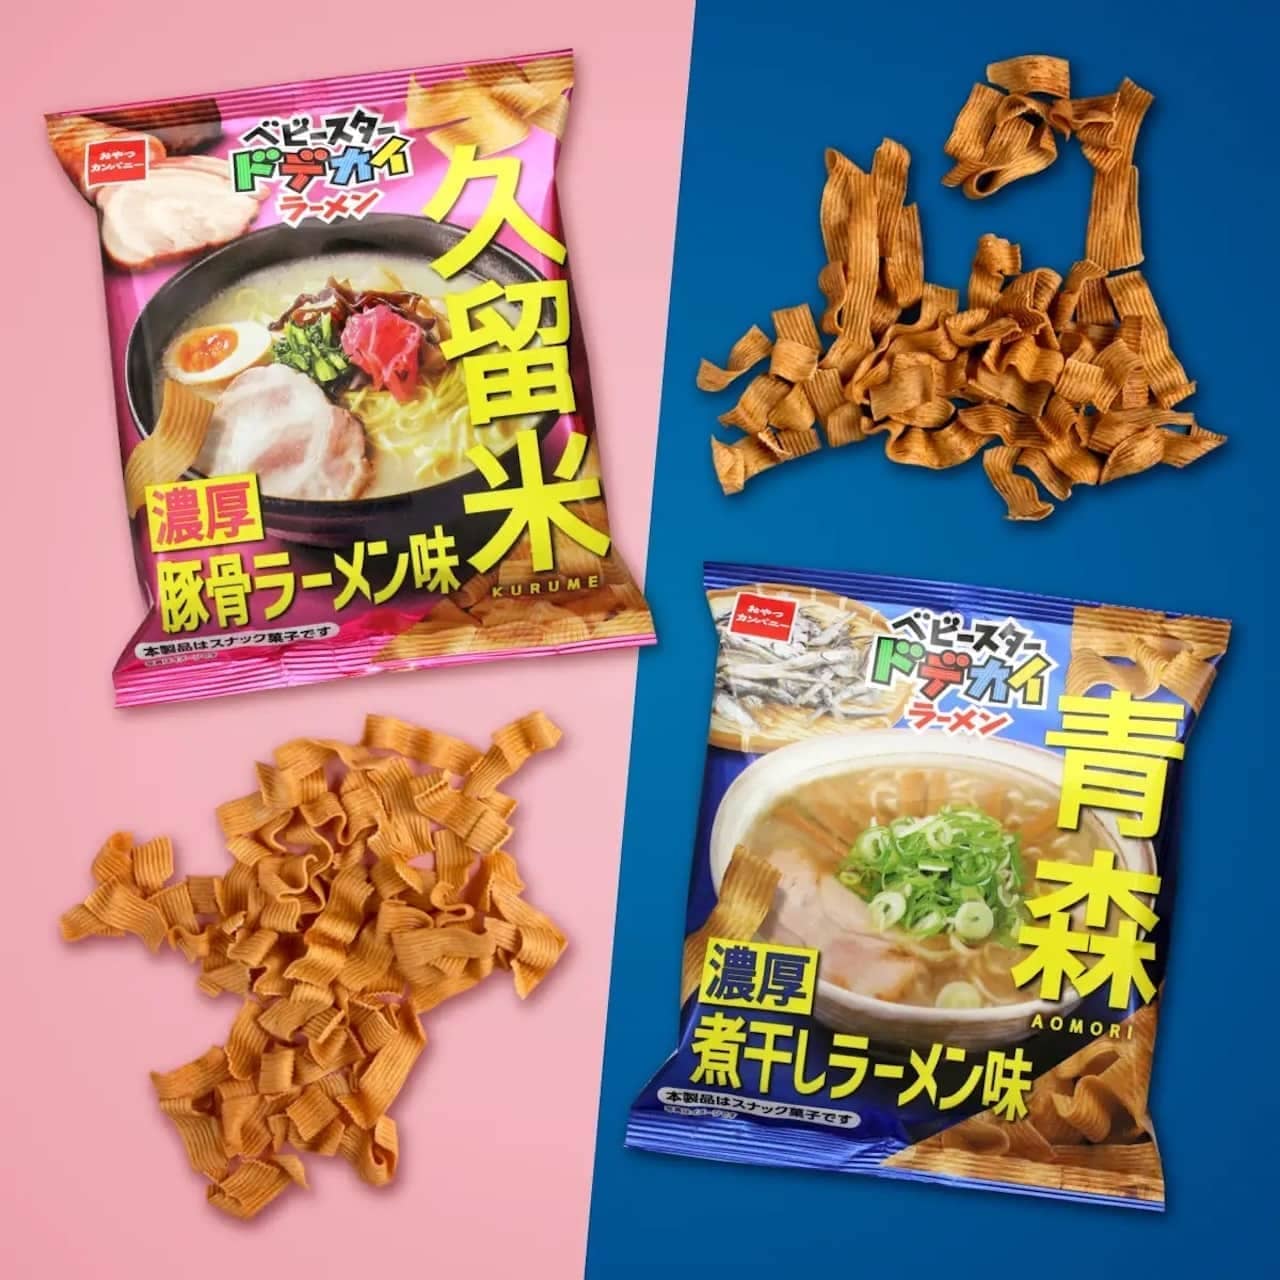 Baby Star Dodekai Ramen (Aomori thick dried-noodle ramen flavor/Kurume thick tonkotsu ramen flavor)" by Oyazuka Company